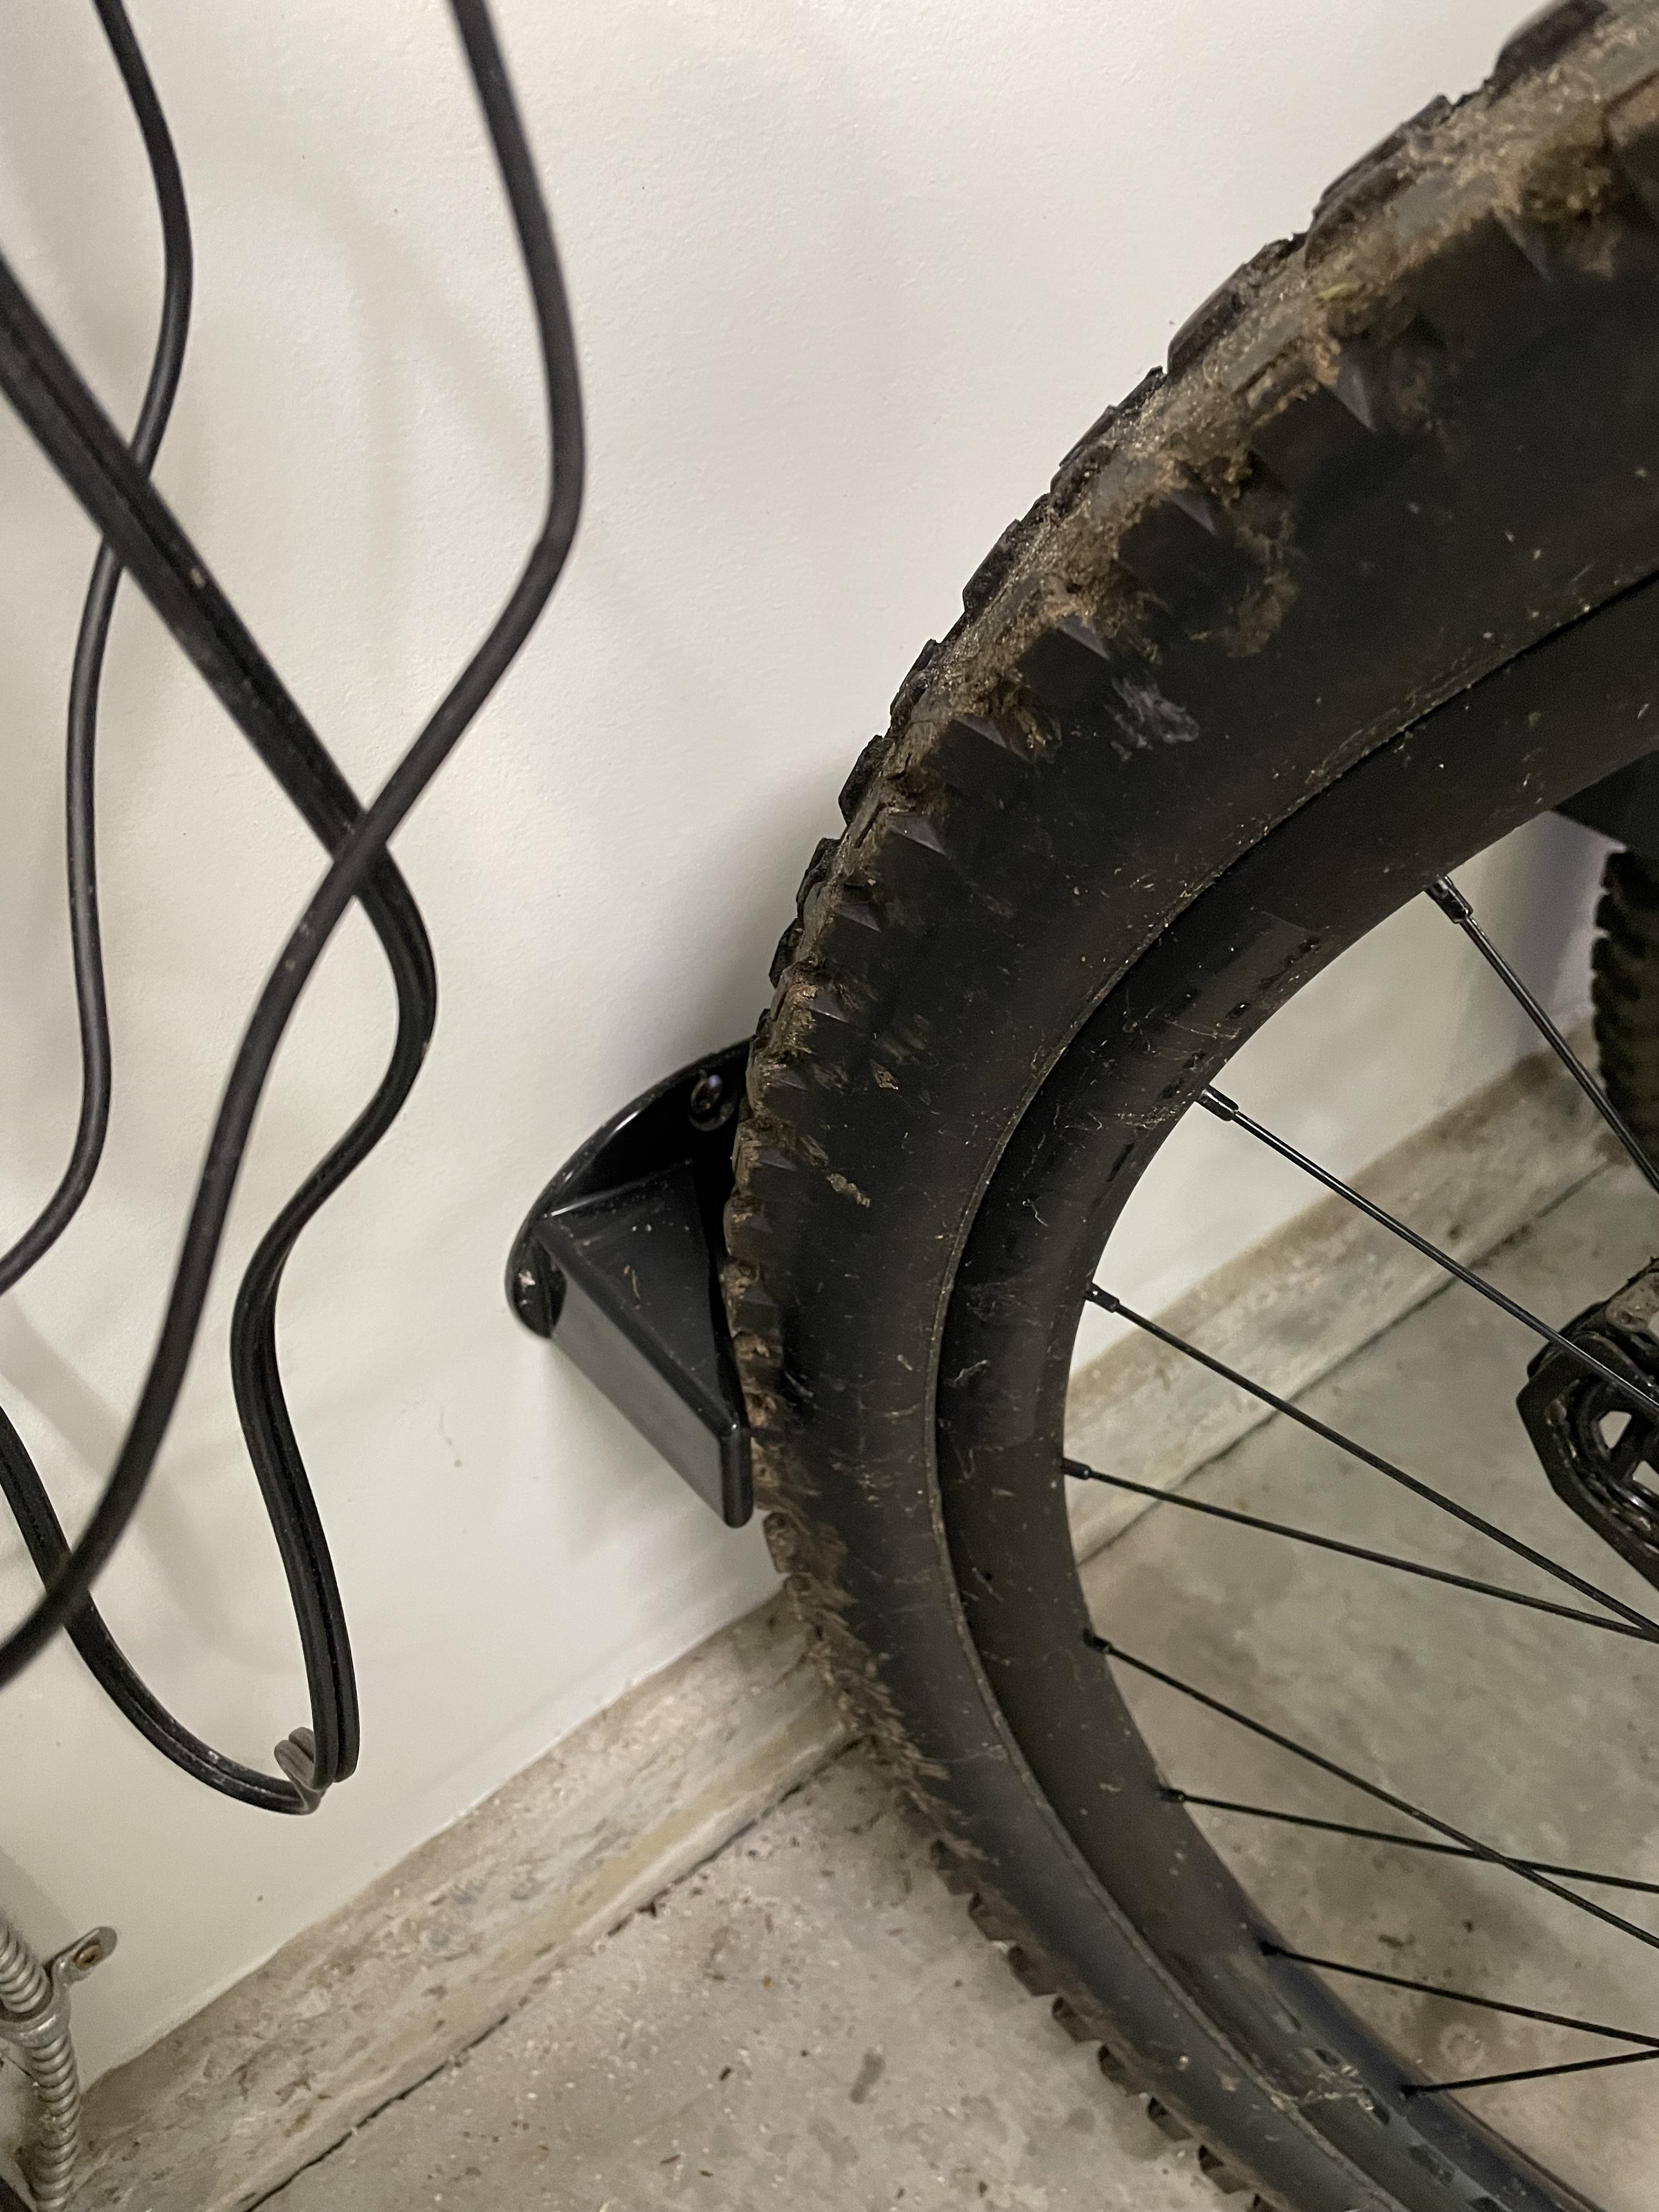 mount bike hanger on drywall - Bike Forums